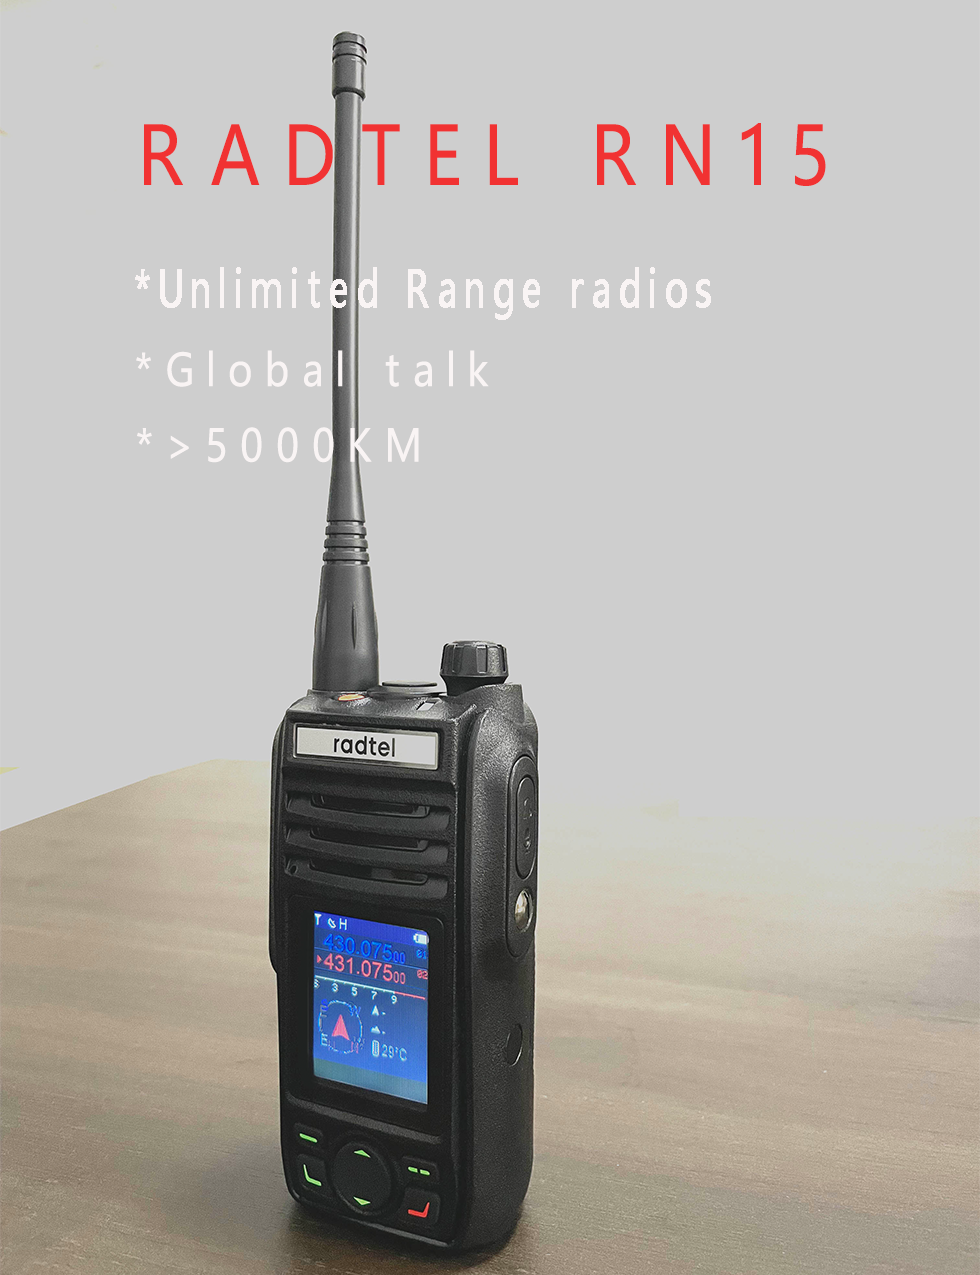 Sillón Acostumbrarse a Principiante Radtel RN15 Global Free Talking Walkie Talkie 500km Unlimited Range Ne